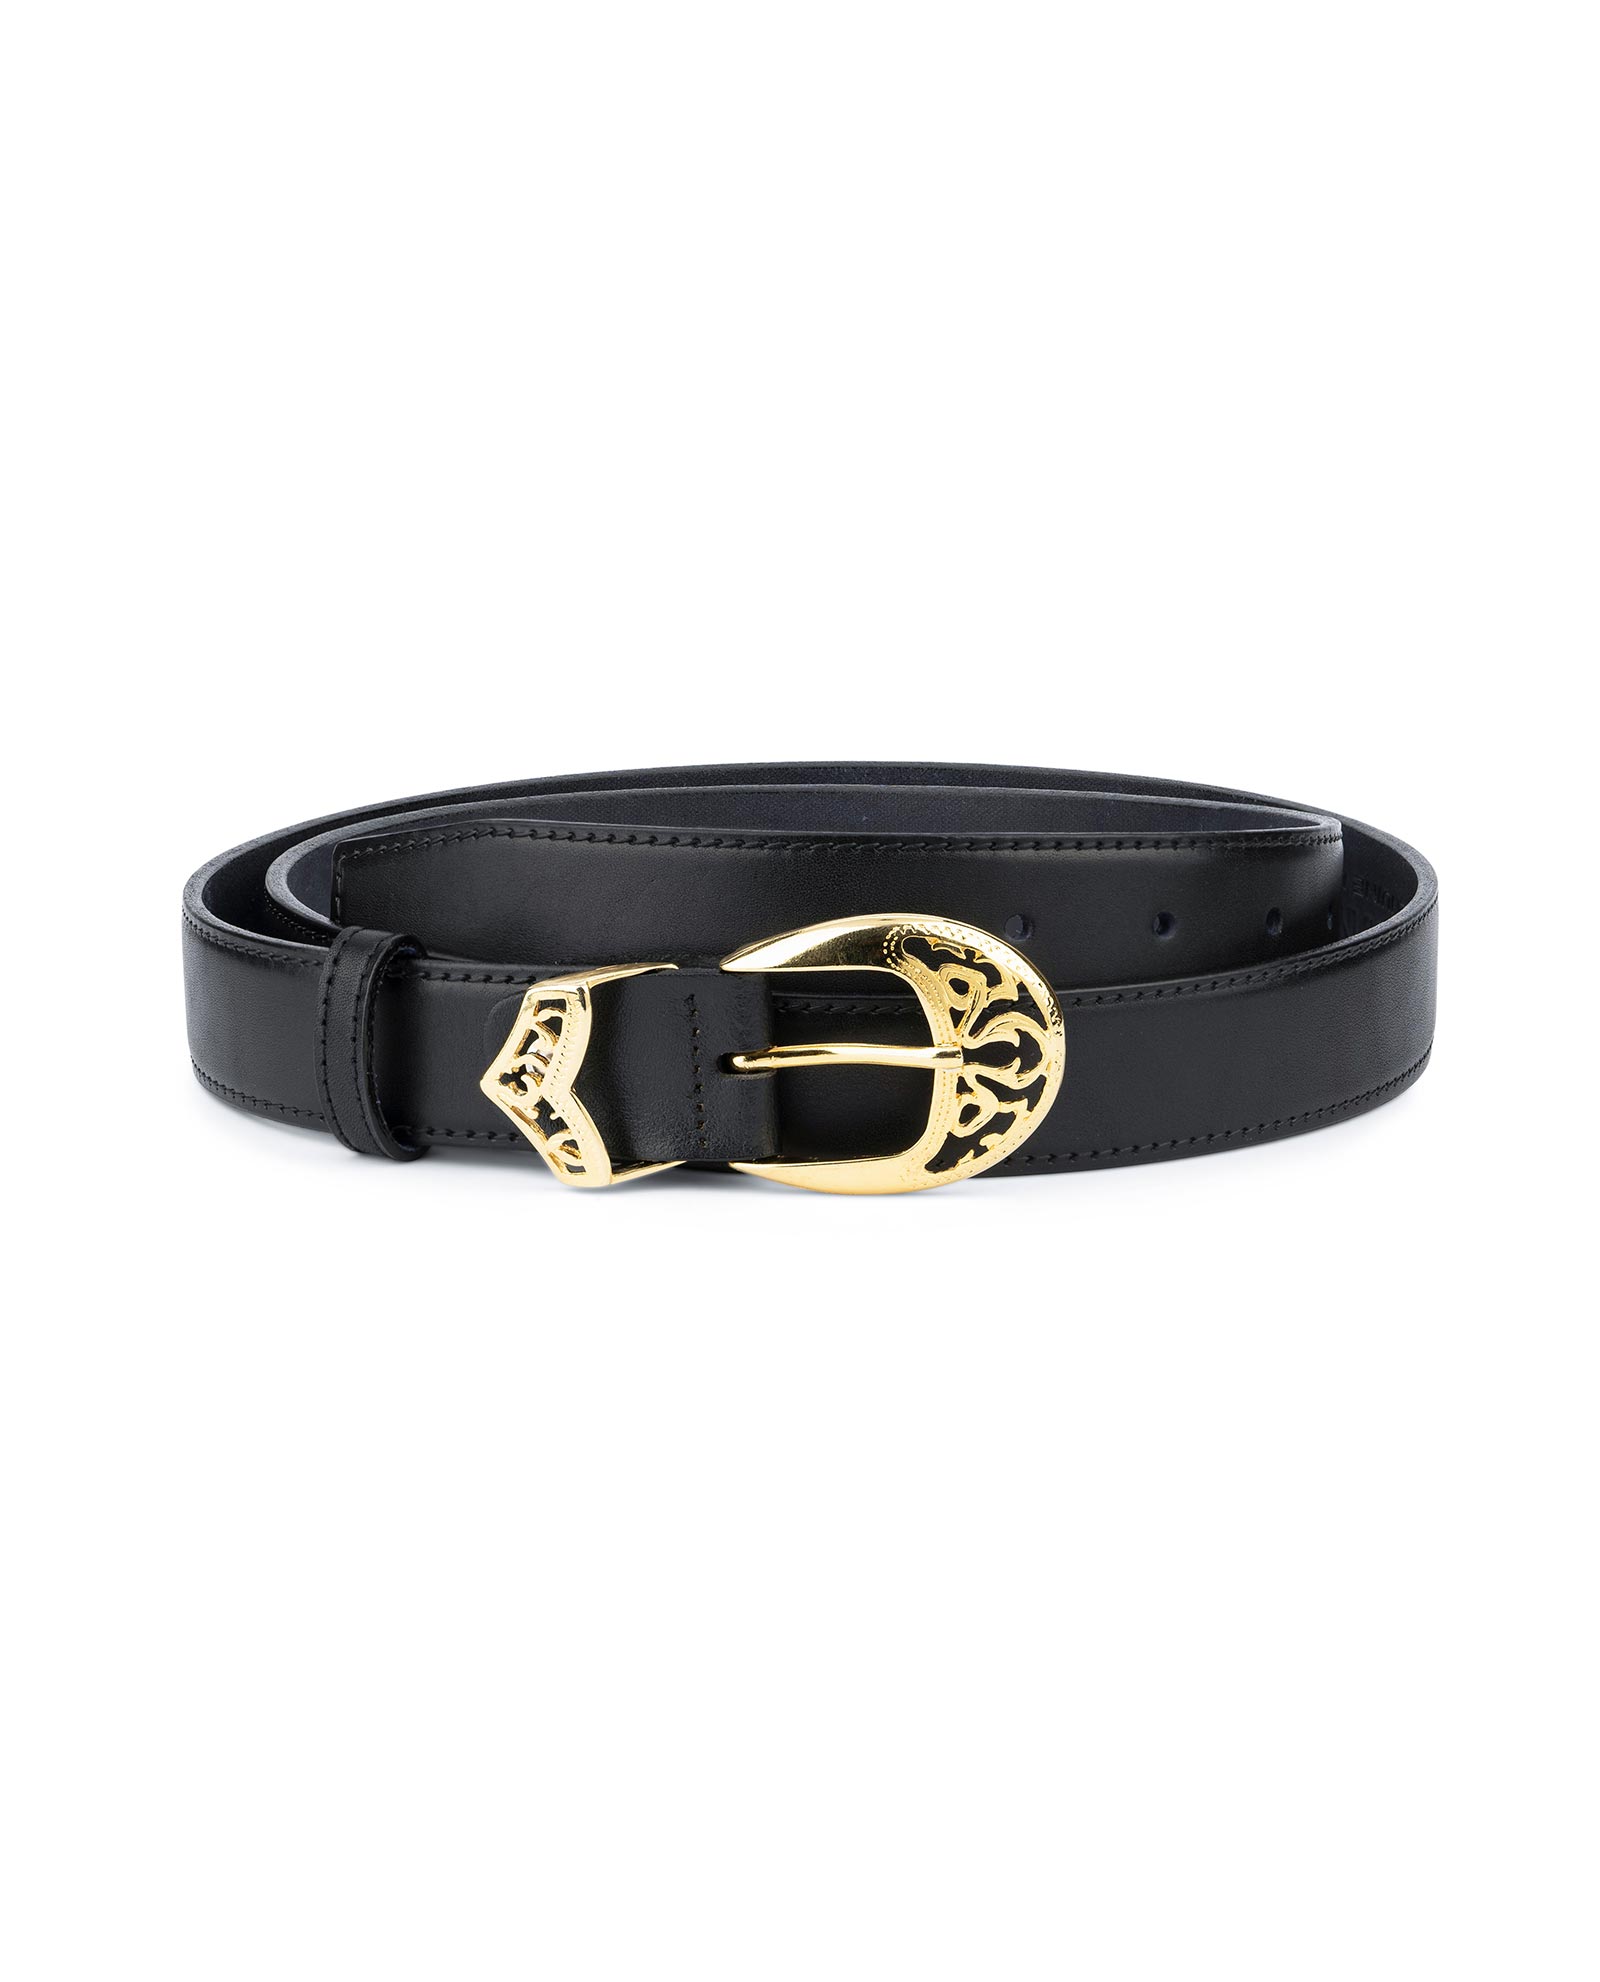 Buy Black Belt with Gold Buckle | Full Grain Leather | LeatherBeltsOnline